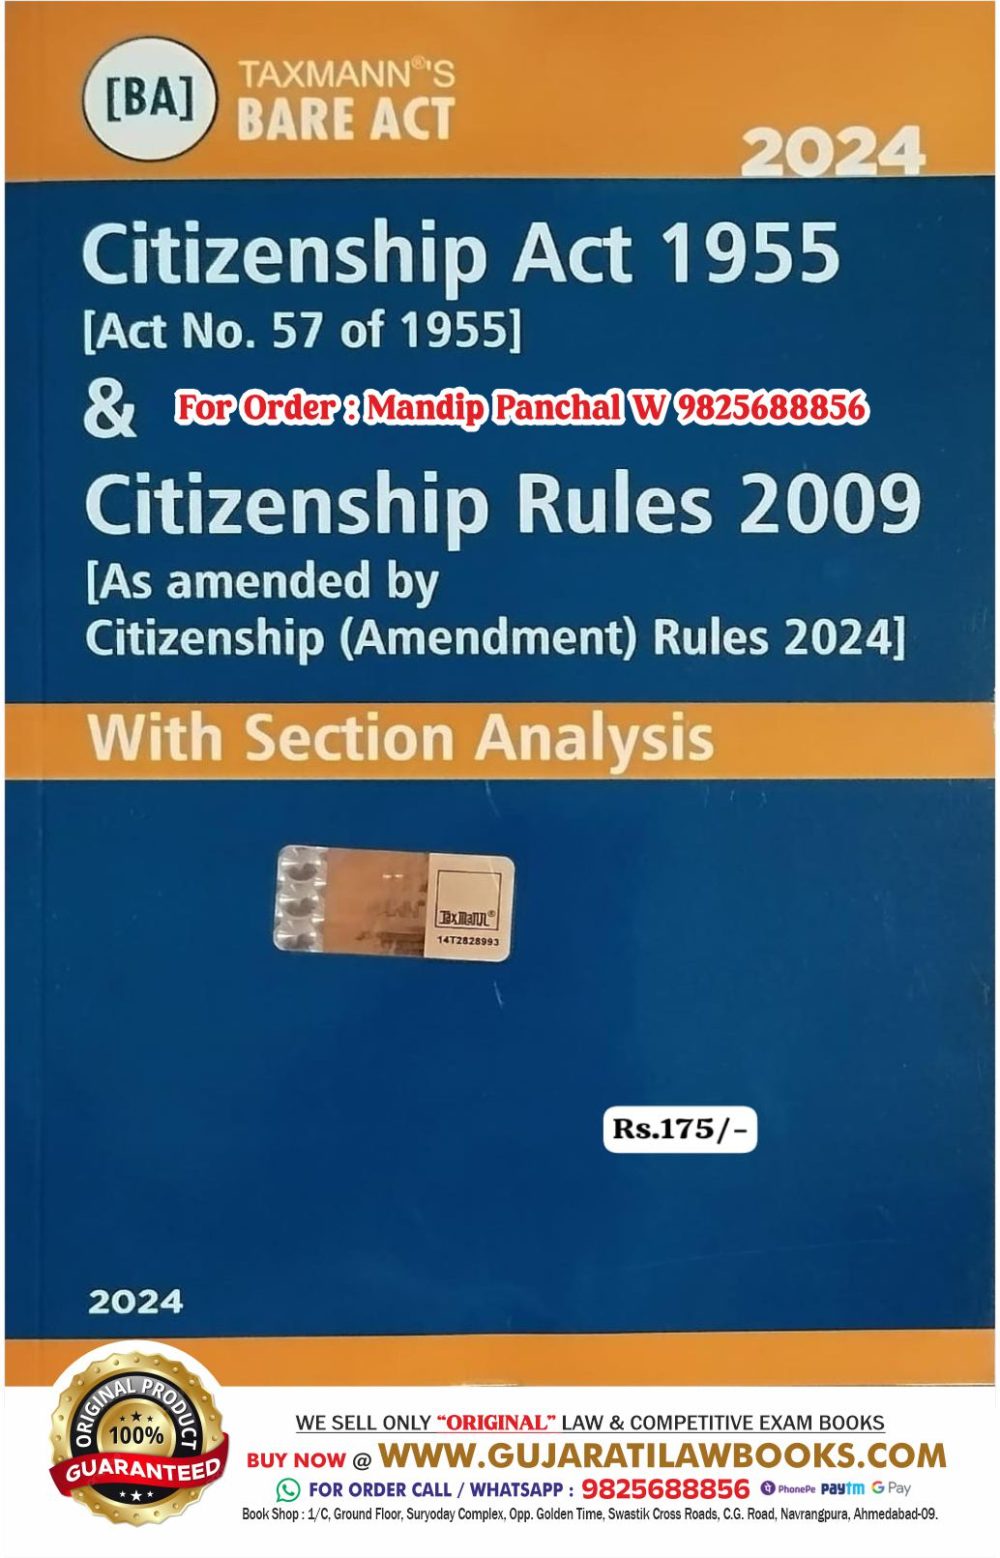 CAA - Citizen Ship Act 1955 & Rules 2009 - BARE ACT - Latest 2024 Edition Taxmann